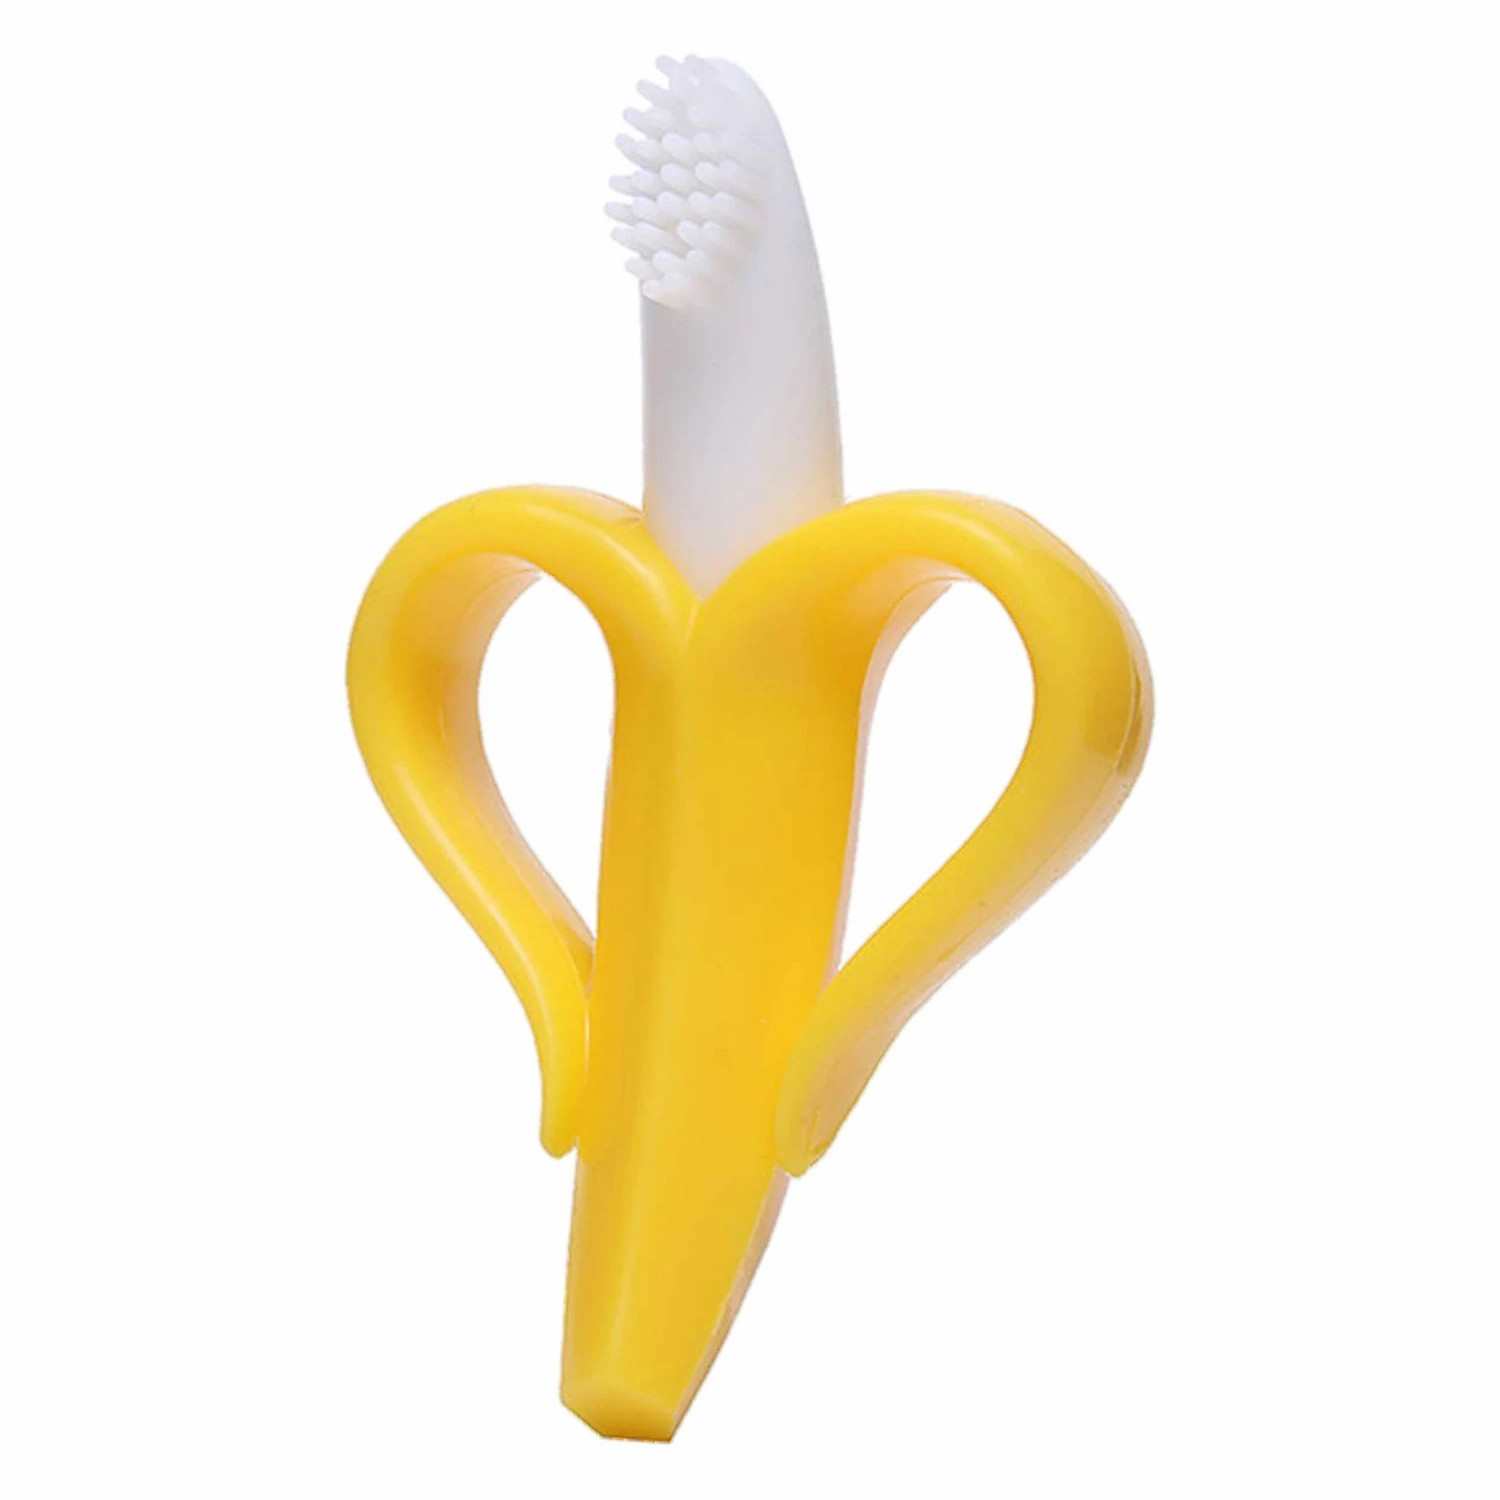 HOPOP Soft Silicone Banana Teether For Babies - Yellow 4m+